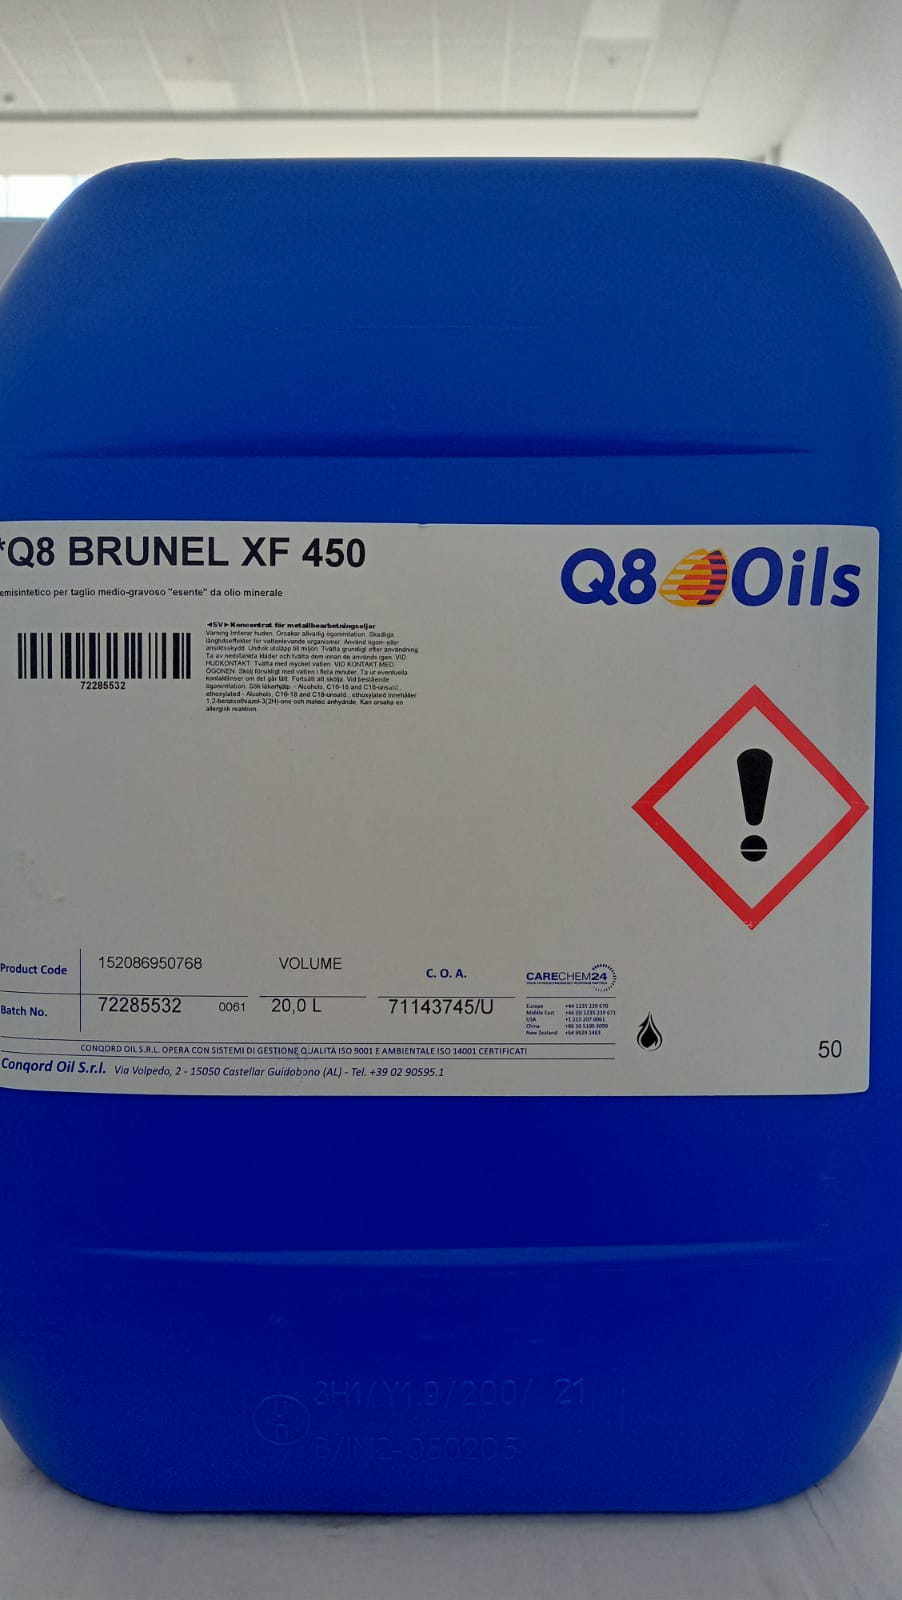 Q8 BRUNEL XF 450